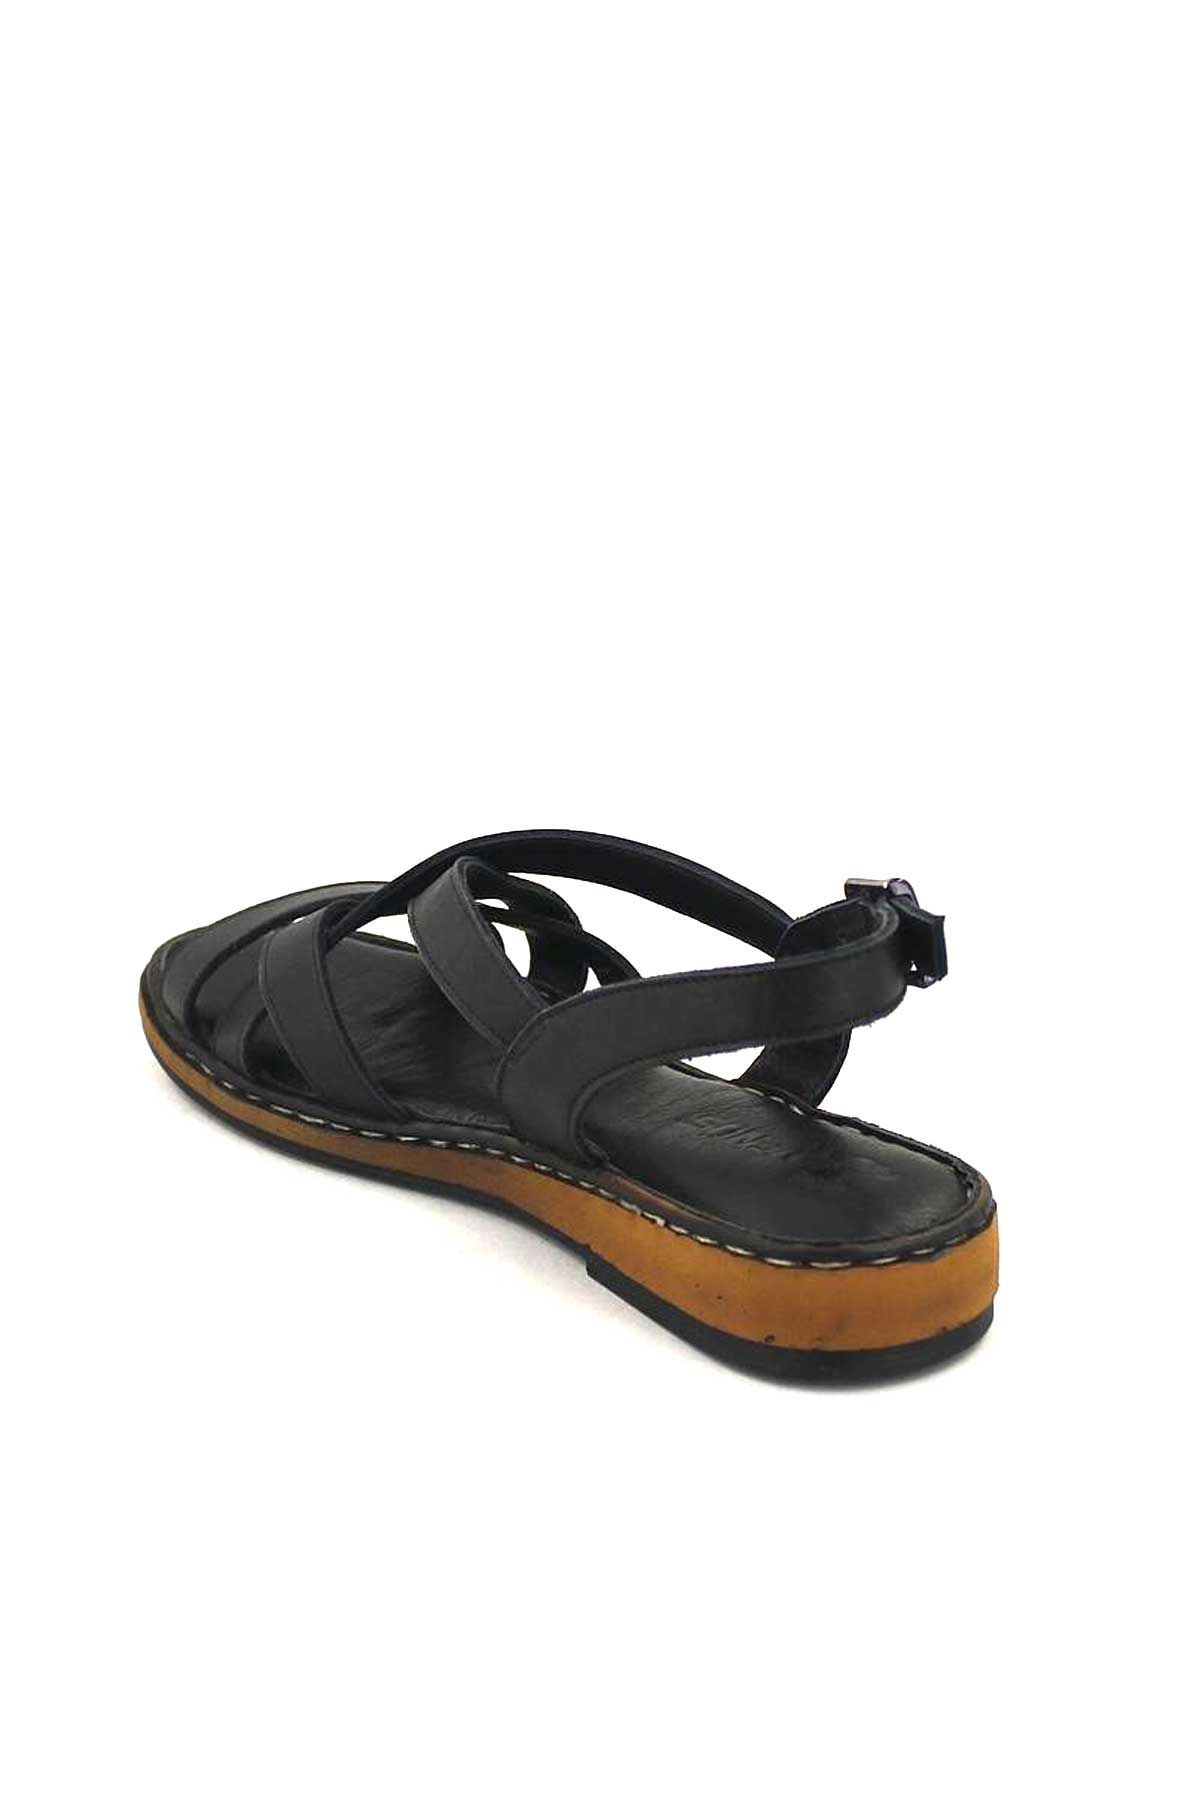 Kadın Deri Sandalet Siyah 20981202 - Thumbnail